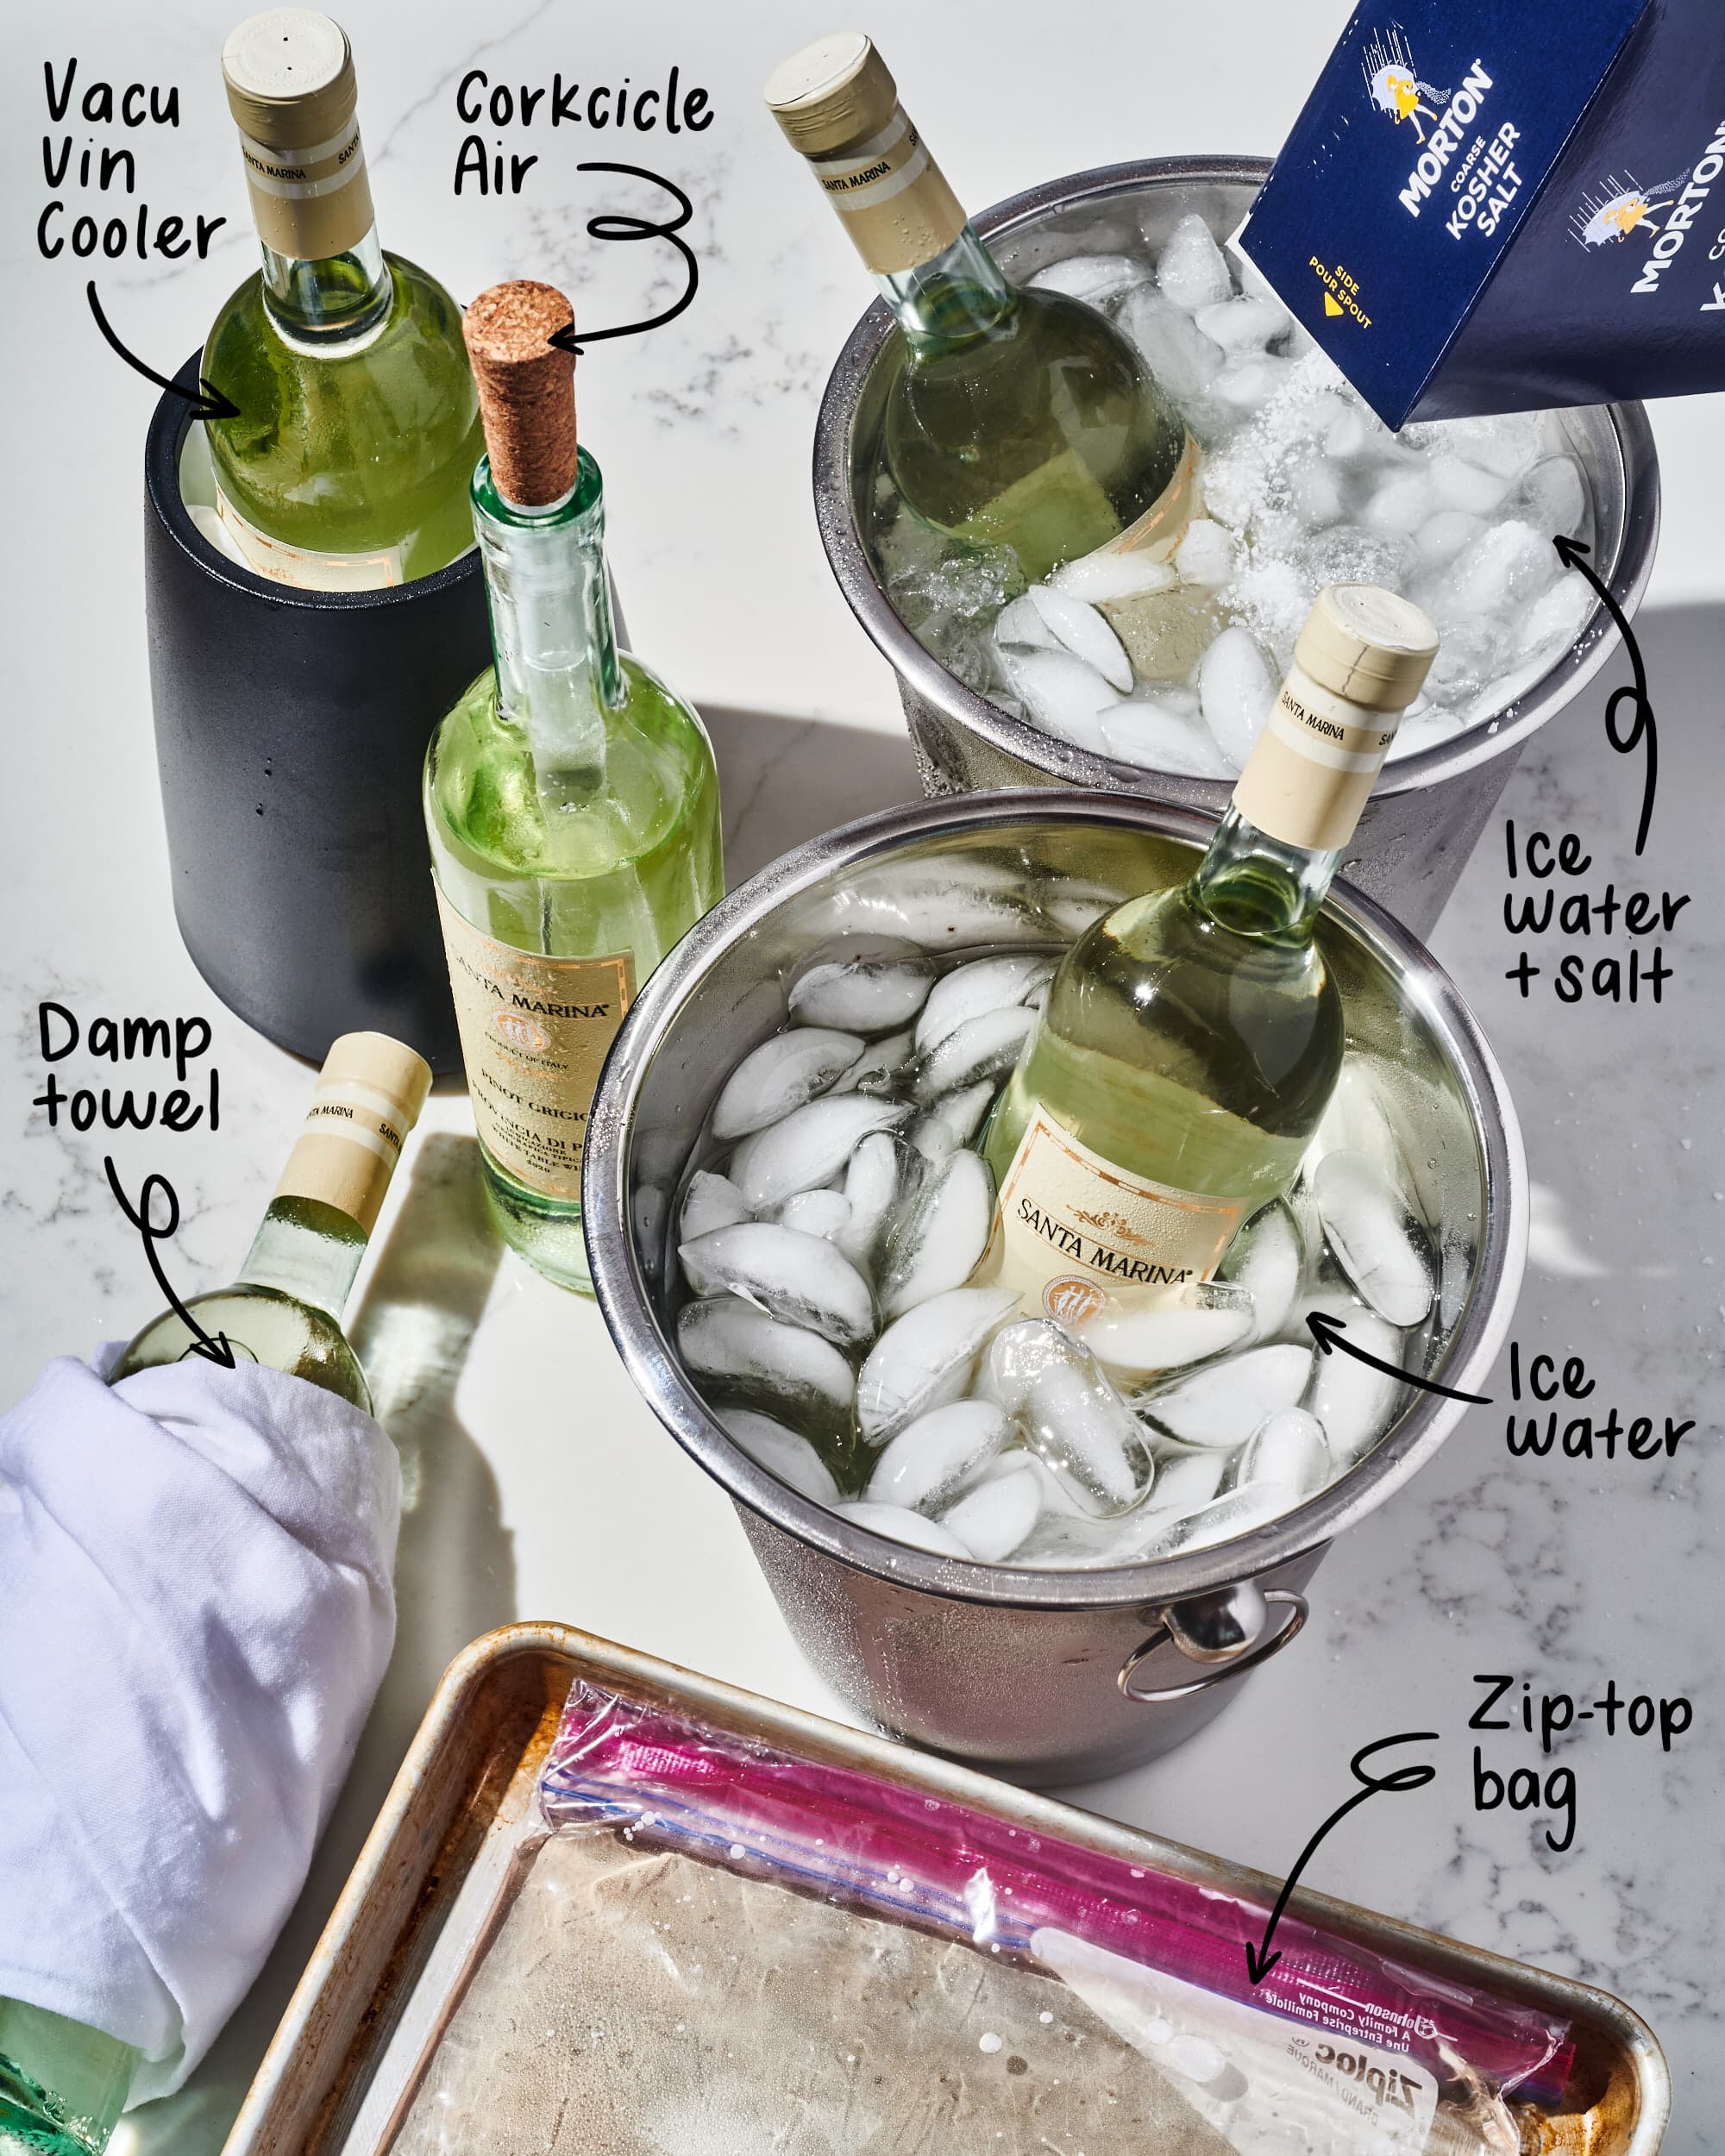 Fancy Wine Chiller Ice Mold